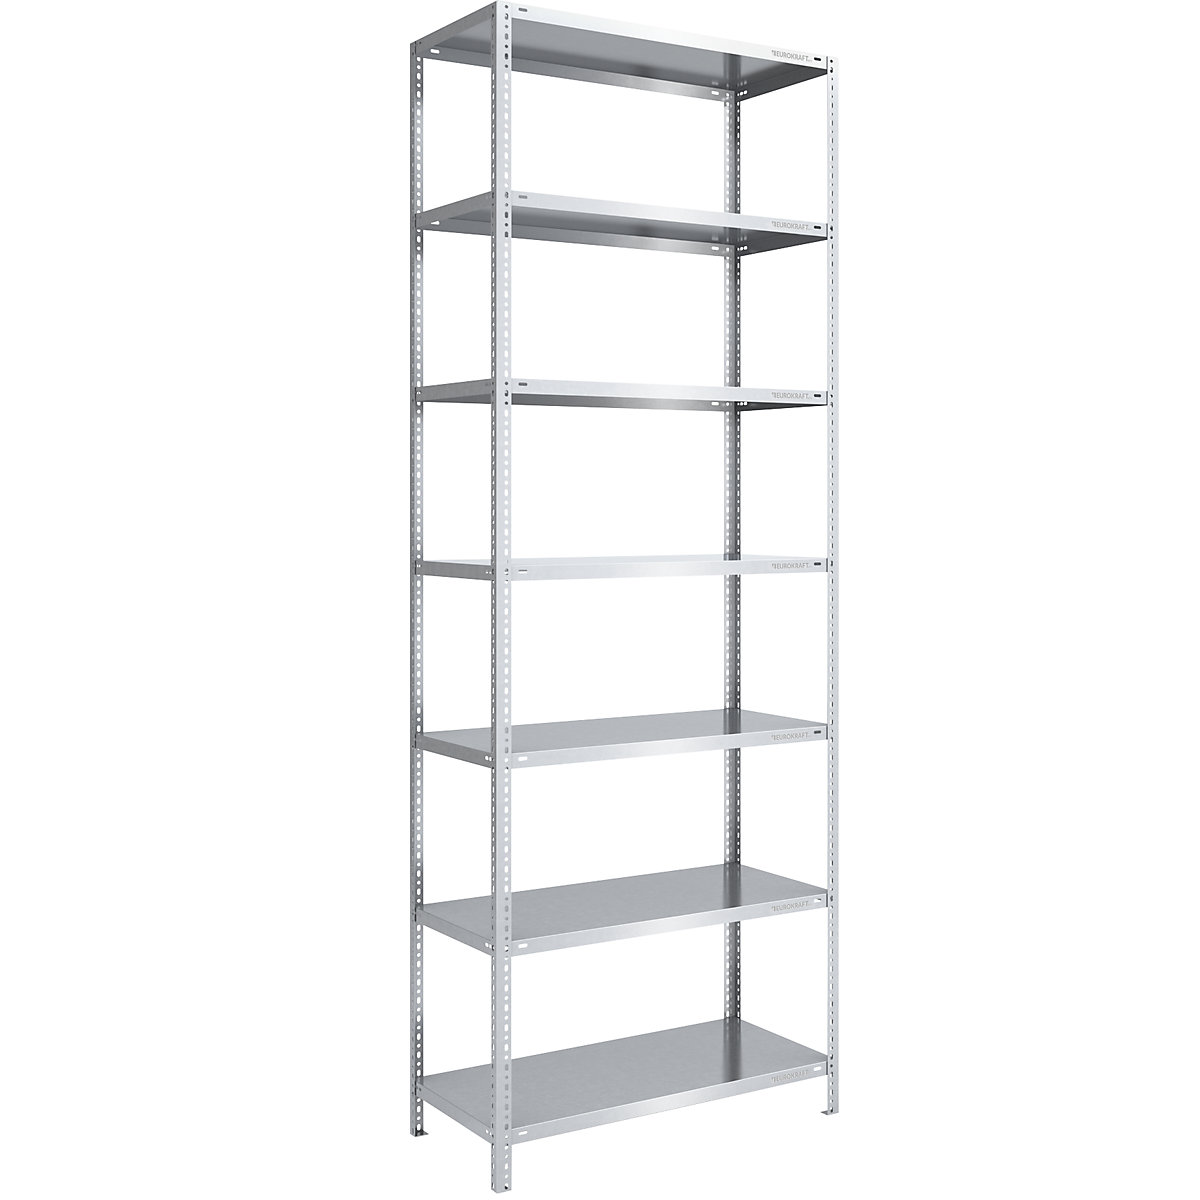 Bolt-together shelf unit, light duty, zinc plated – eurokraft pro, shelf unit height 3000 mm, shelf width 1000 mm, depth 600 mm, standard shelf unit-14